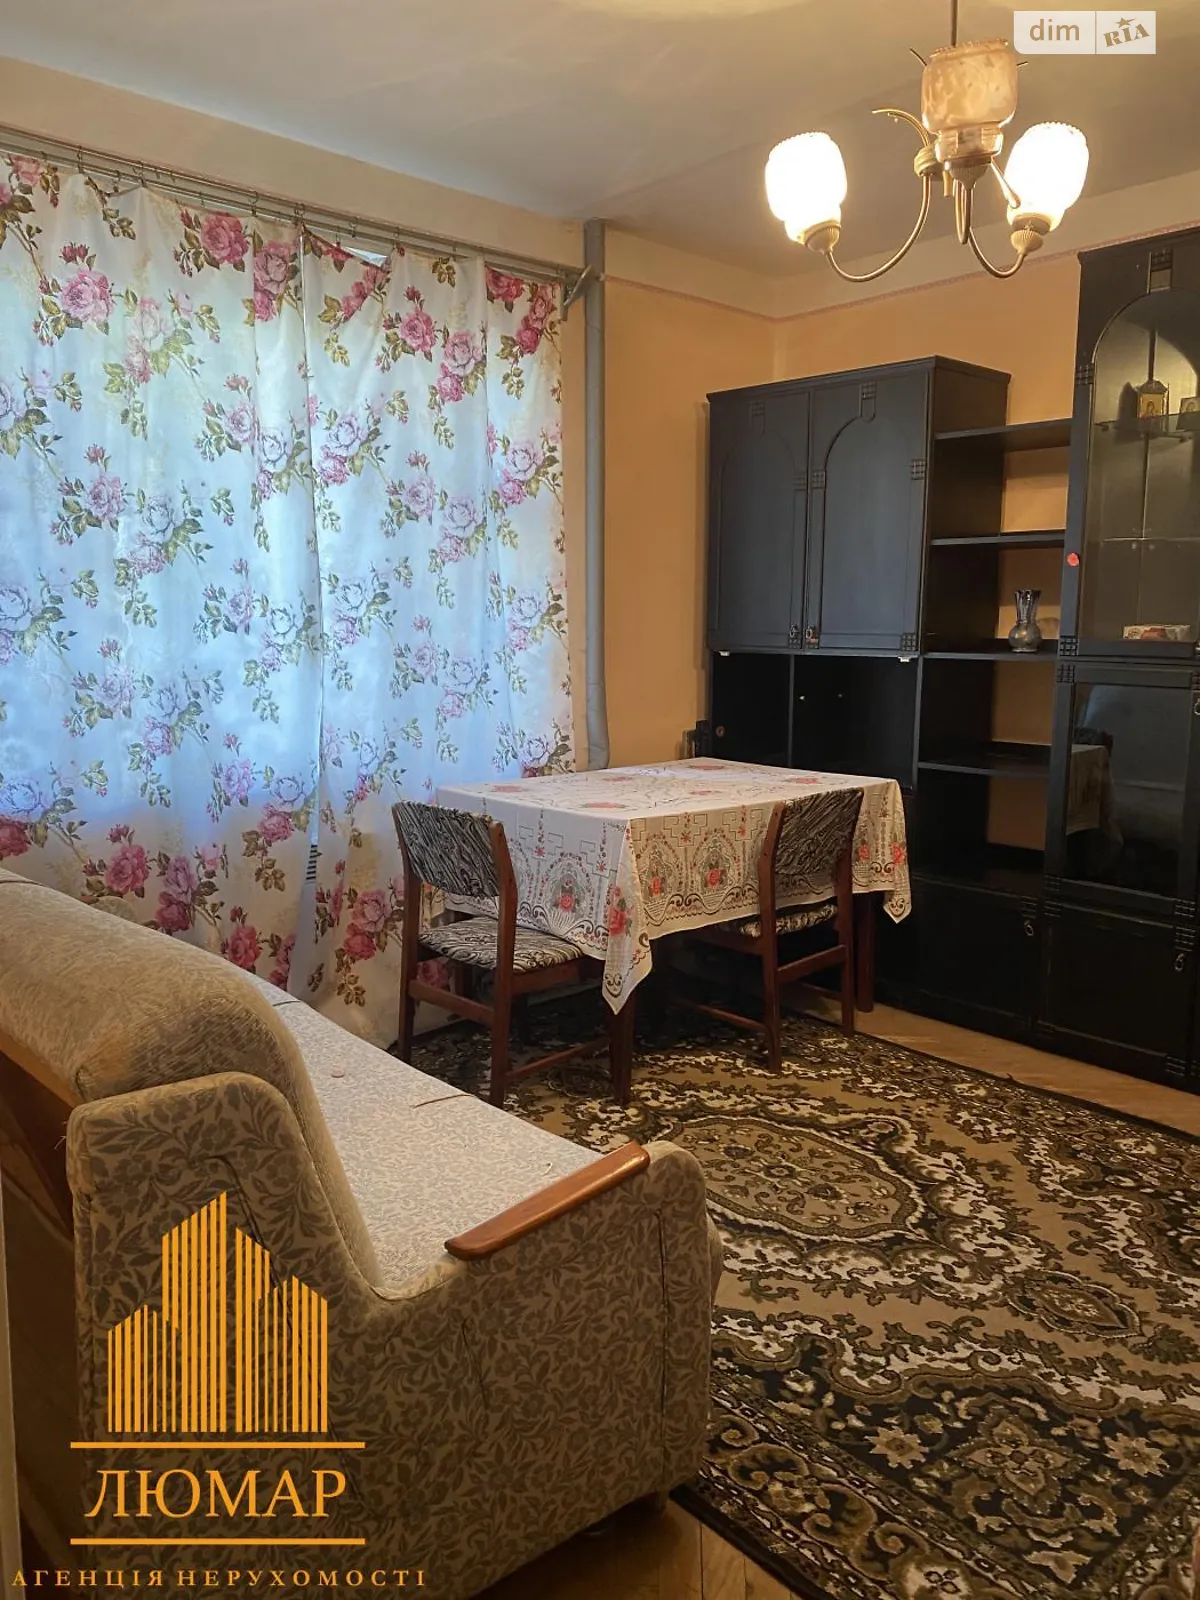 Сдается в аренду 1-комнатная квартира 28 кв. м в Львове, ул. Миколайчука - фото 1